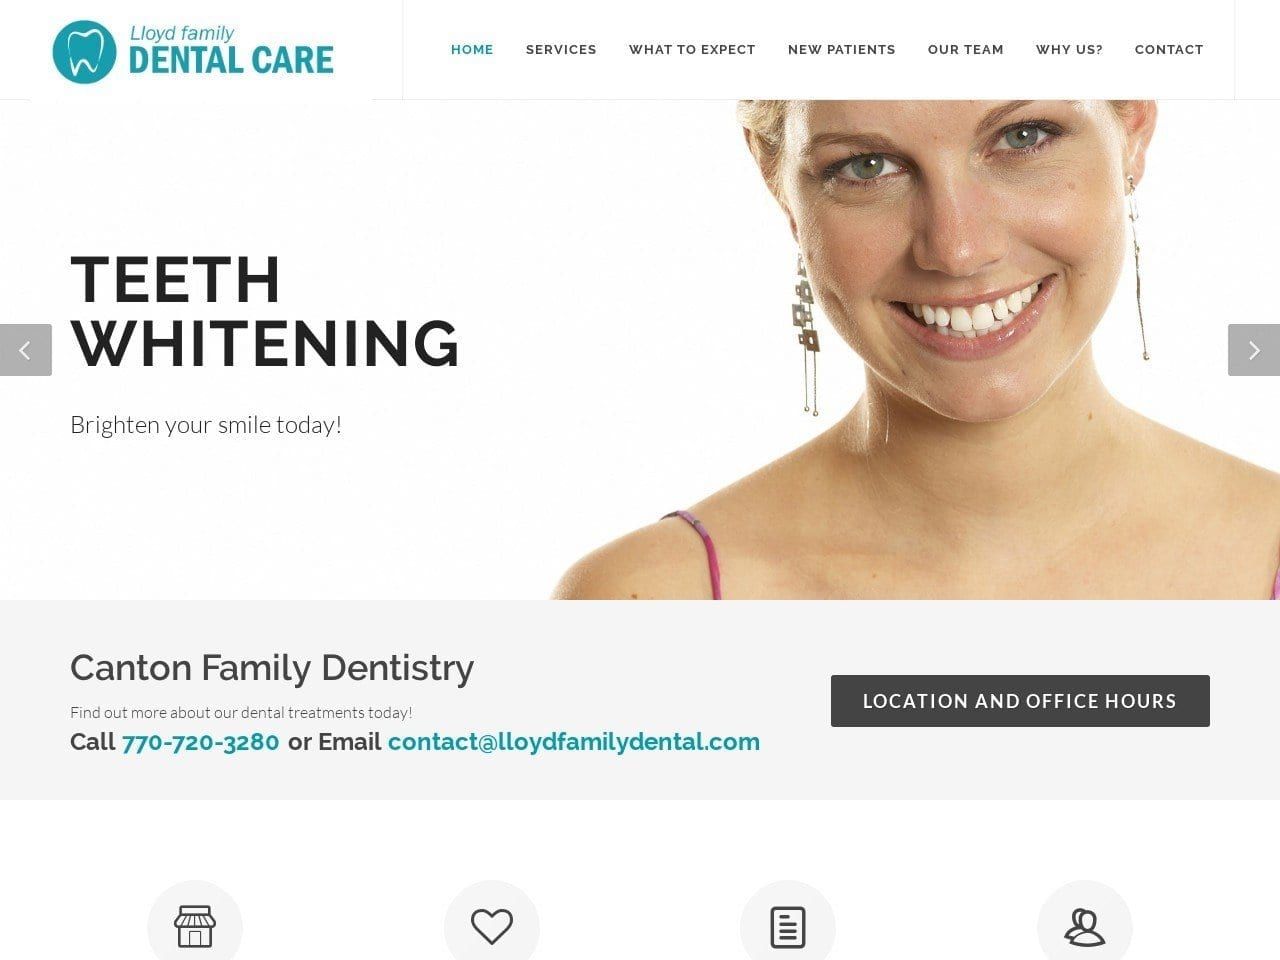 Lloyd Family Dental Care Website Screenshot from lloydfamilydental.com